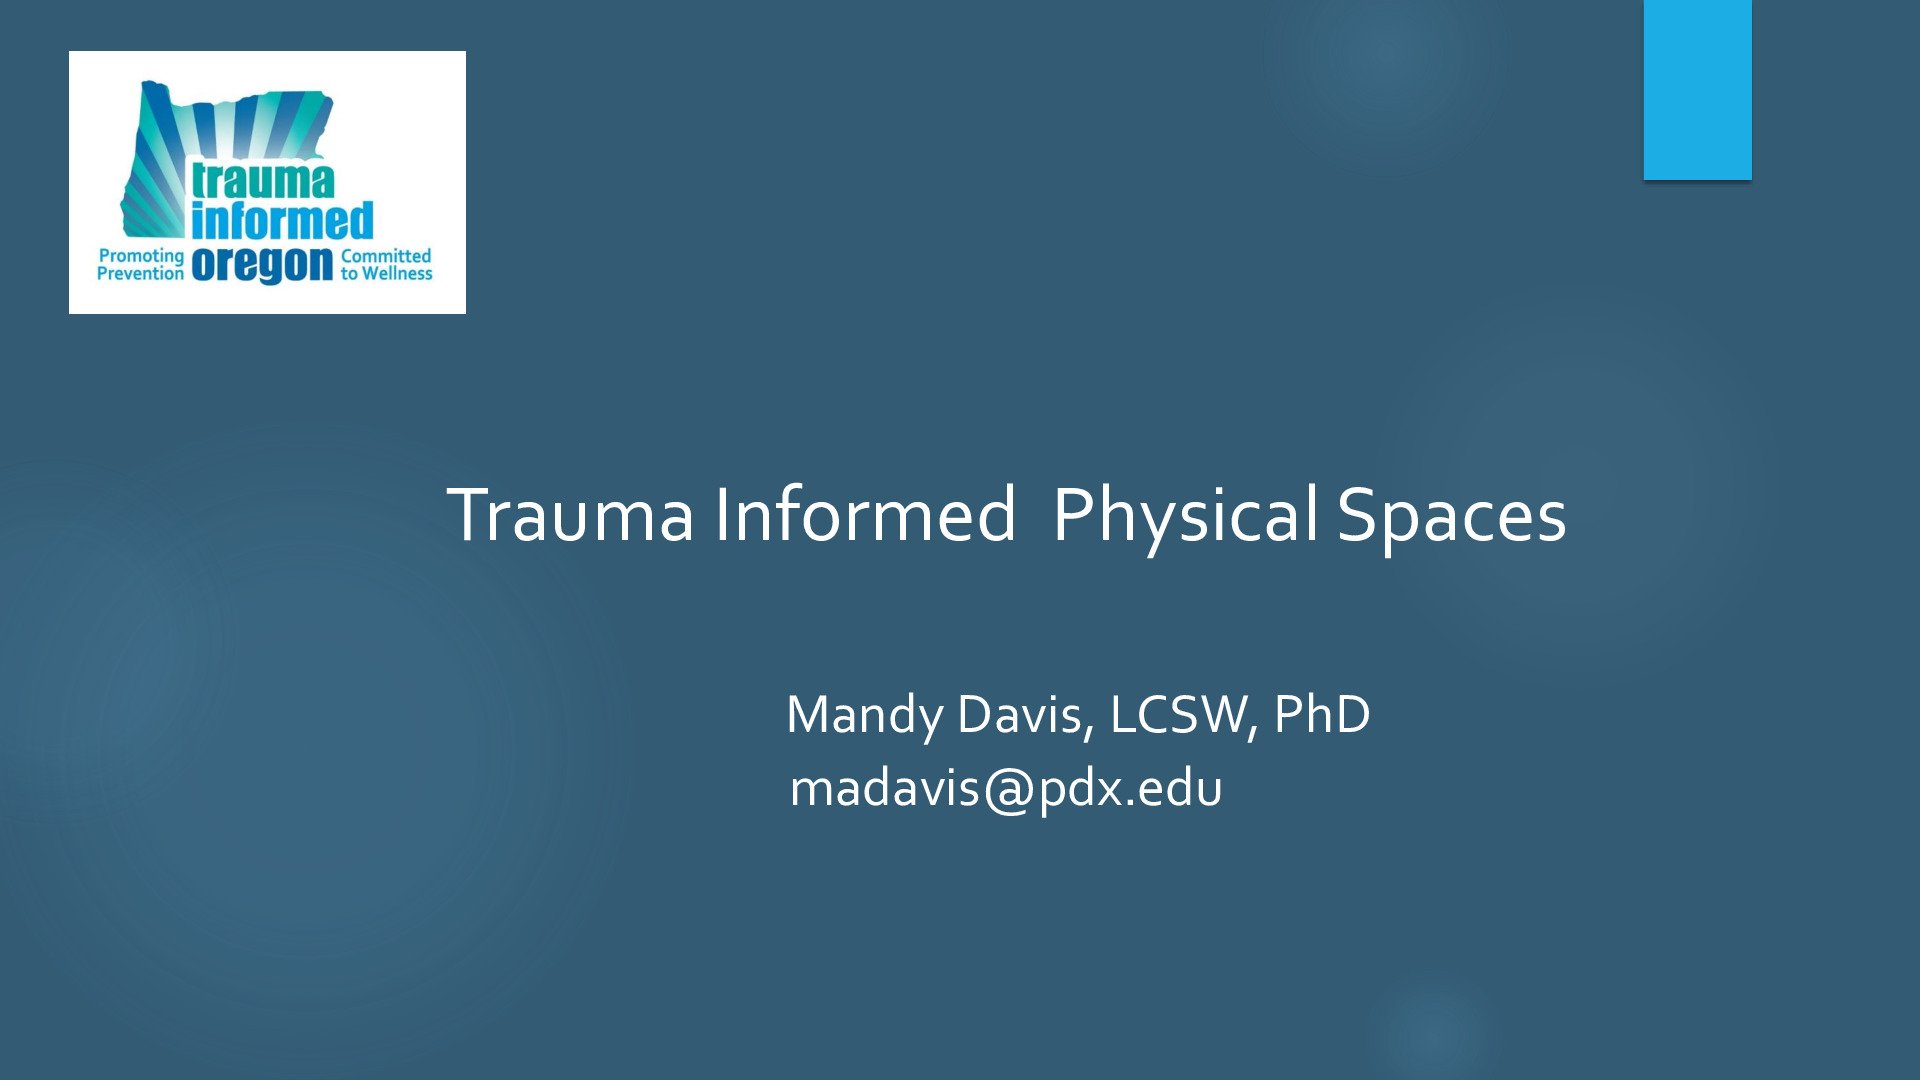 040320 - Trauma Informed Oregon - Mandy Davis - Trauma Informed Physical Environments Seminar